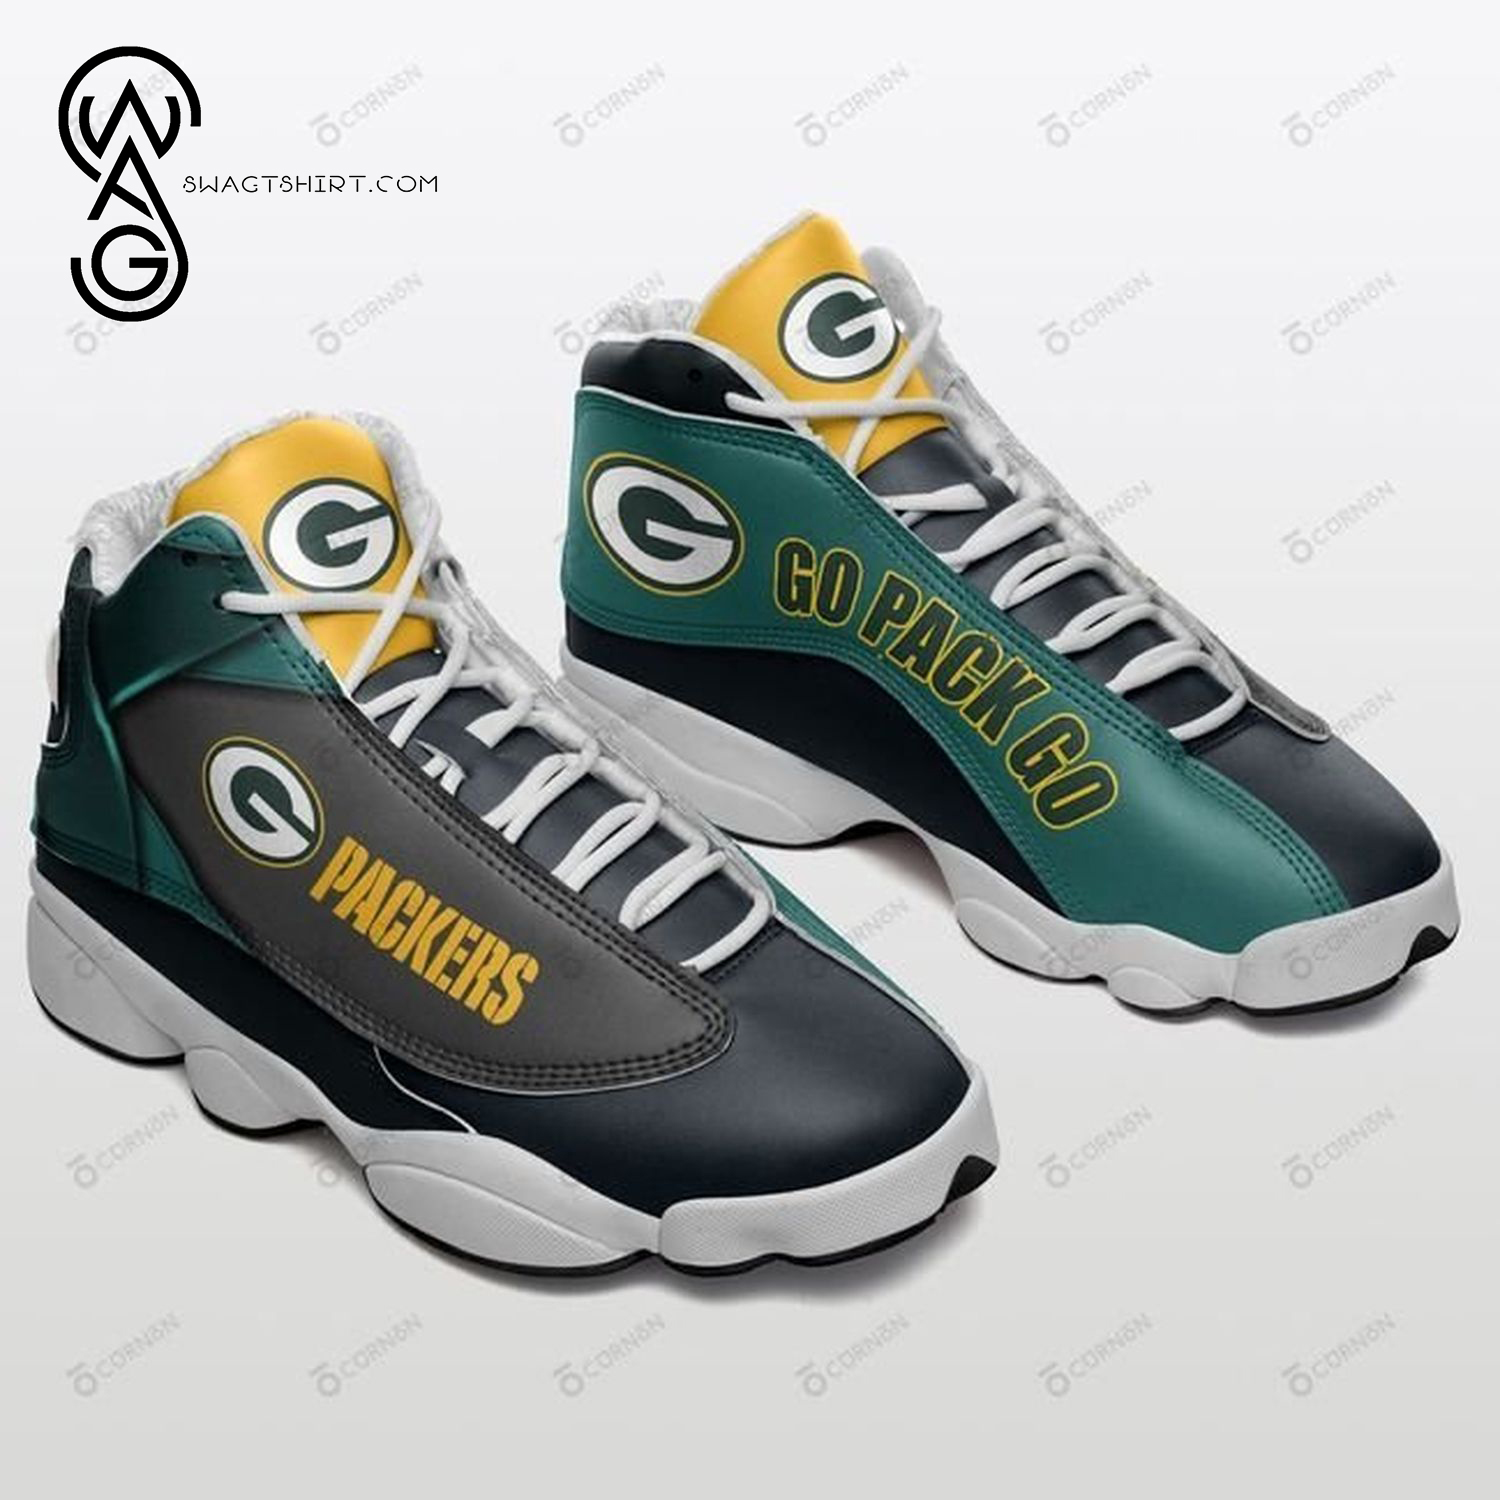 Green Bay Packers Go Pack Go Air Jordan 13 Shoes